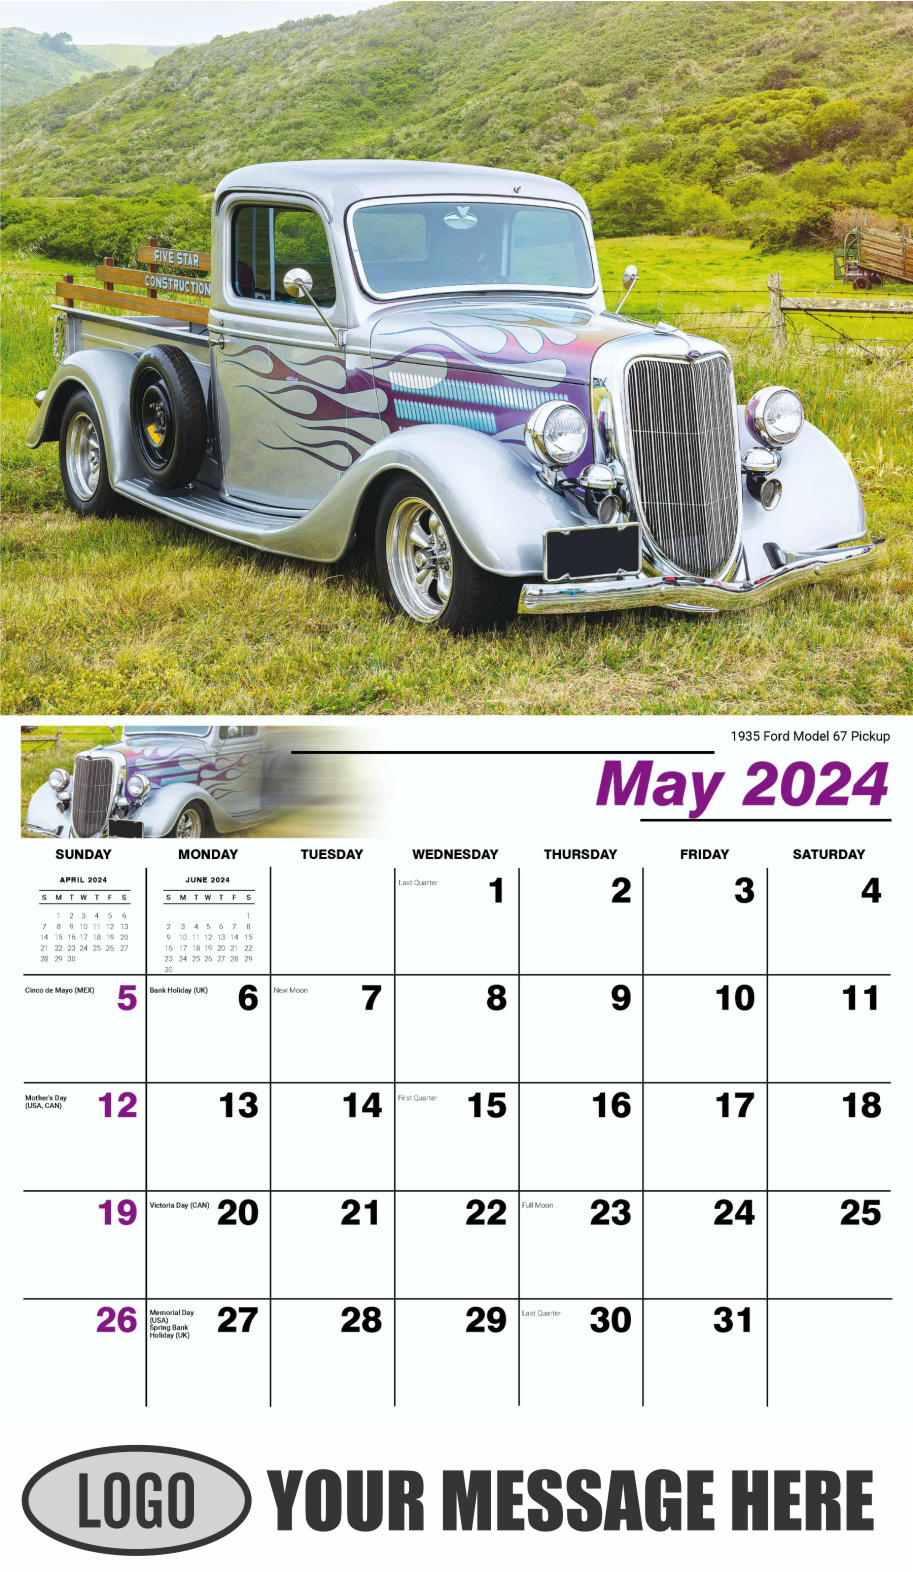 Pumped-Up Pickups 2024 Automotive Business Promo Calendar - May